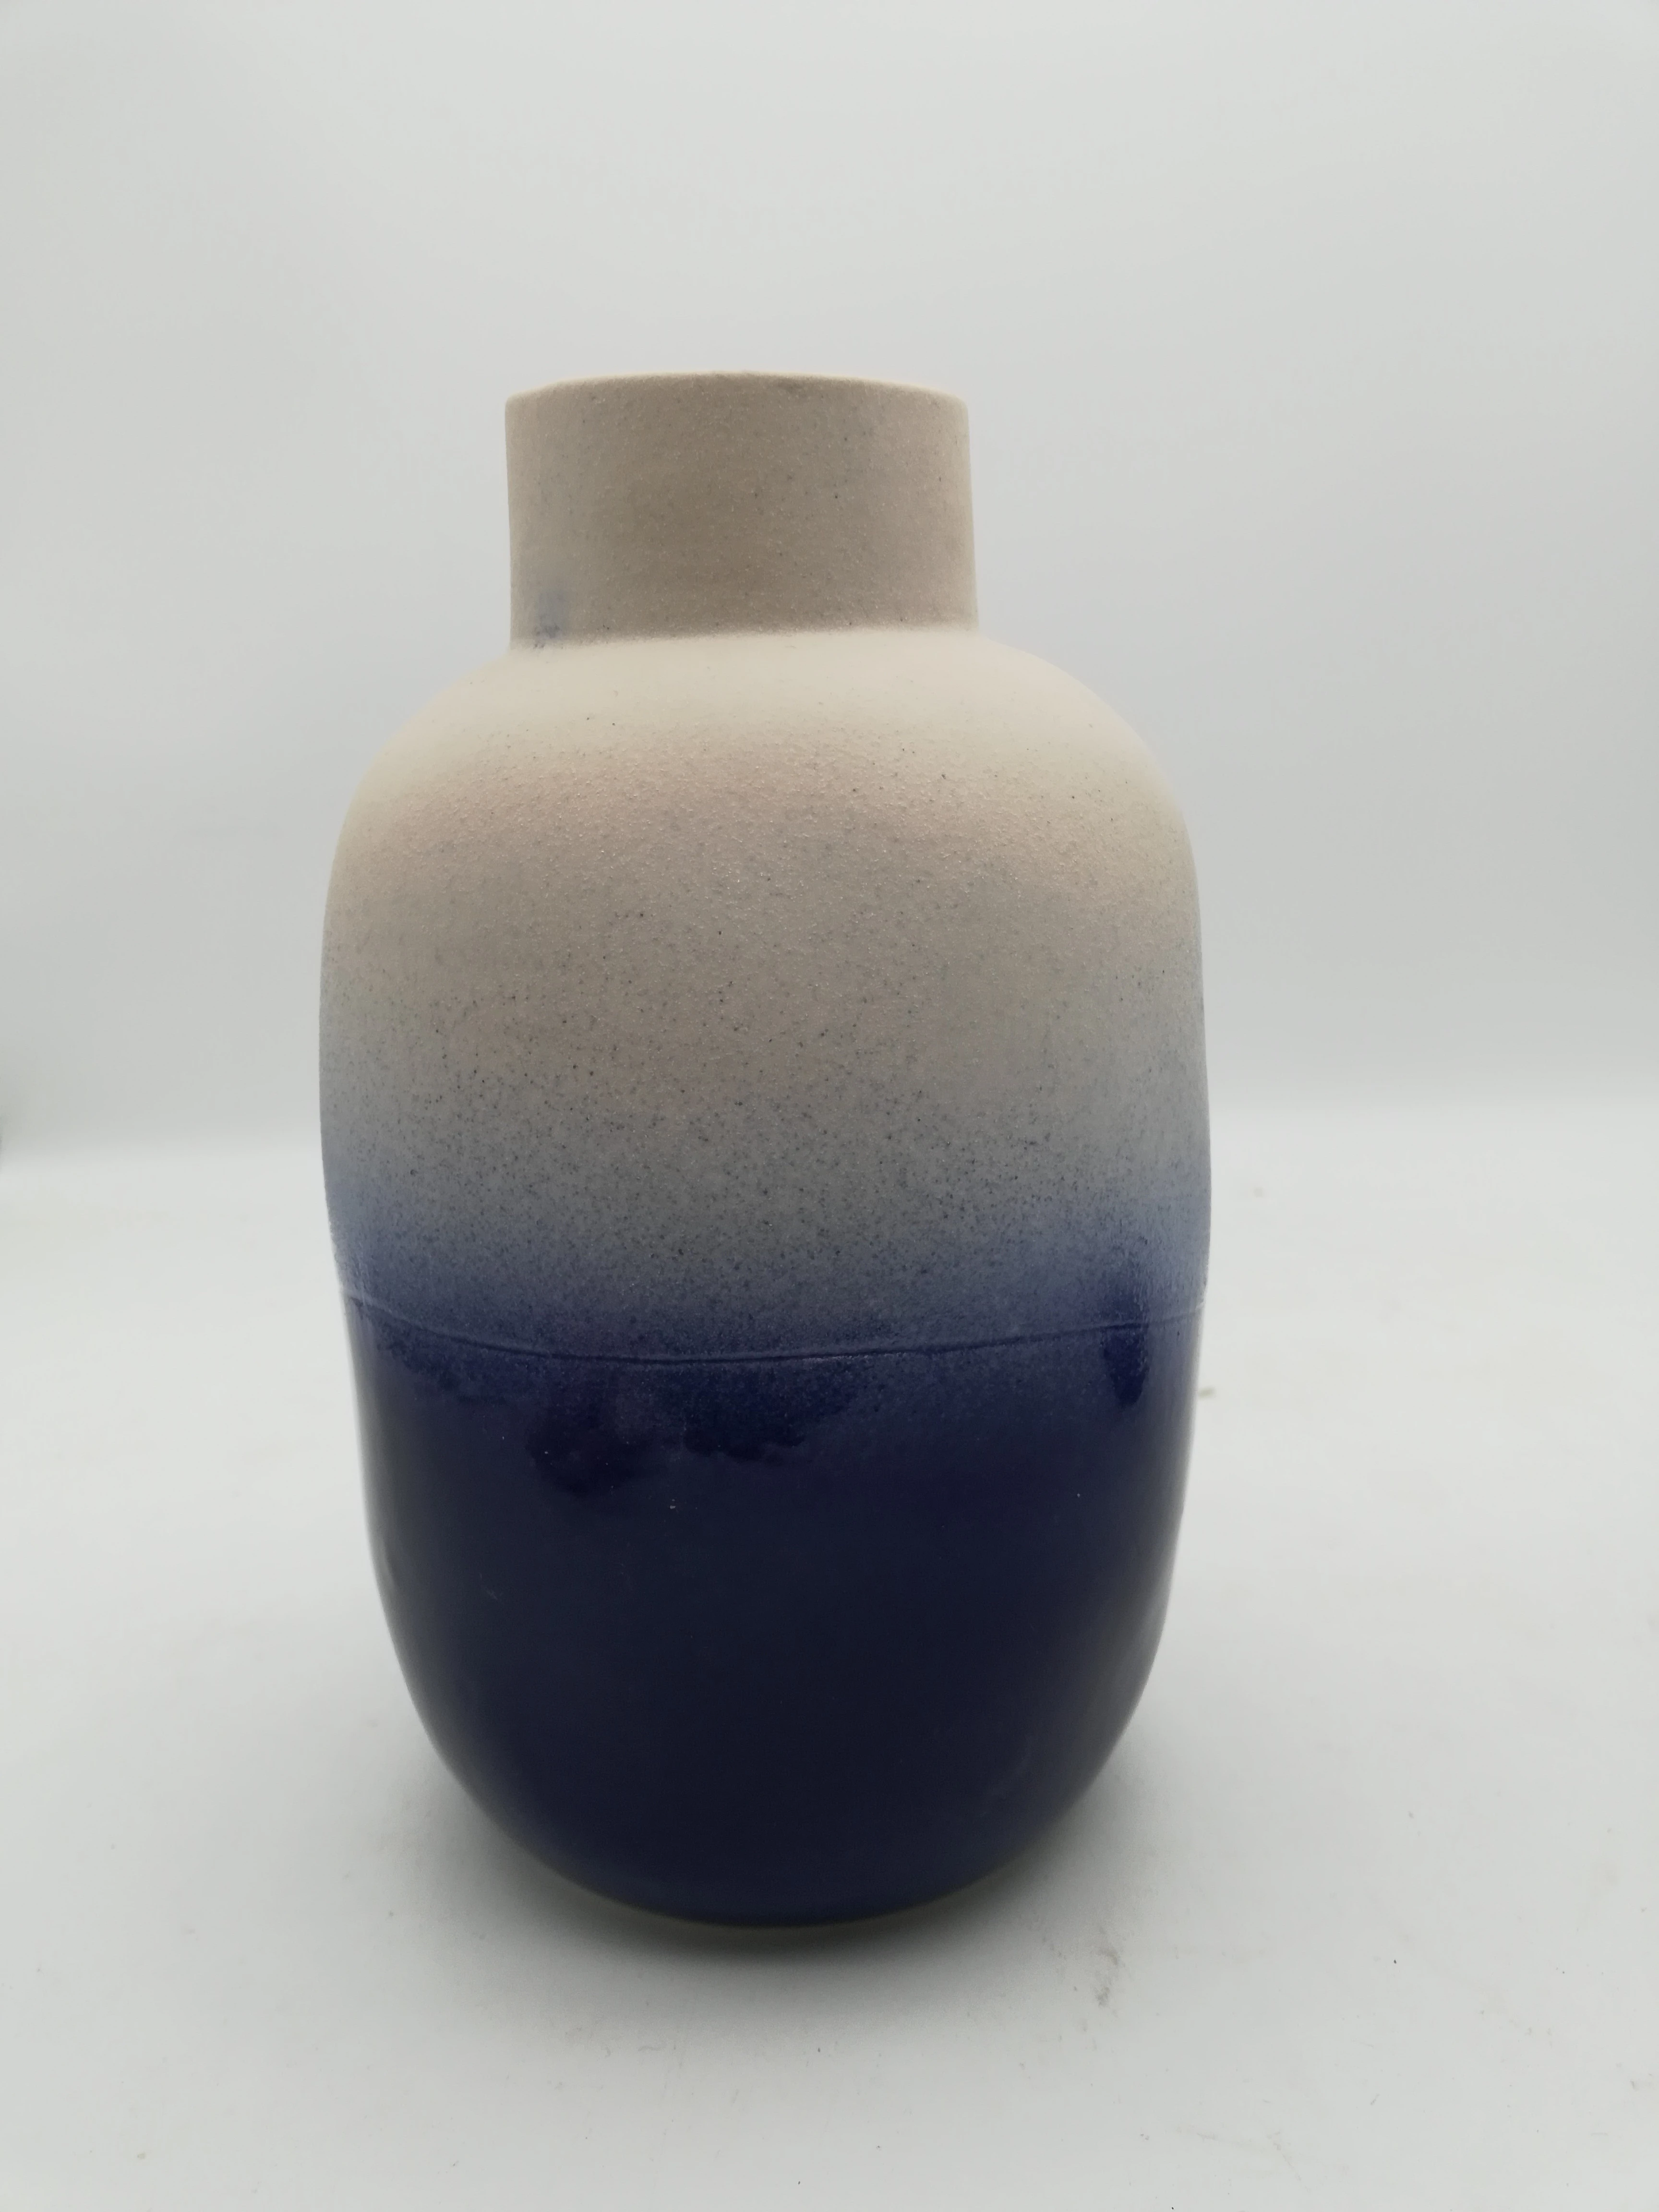 Custom wholesale vases, ceramic vases, porcelain vases